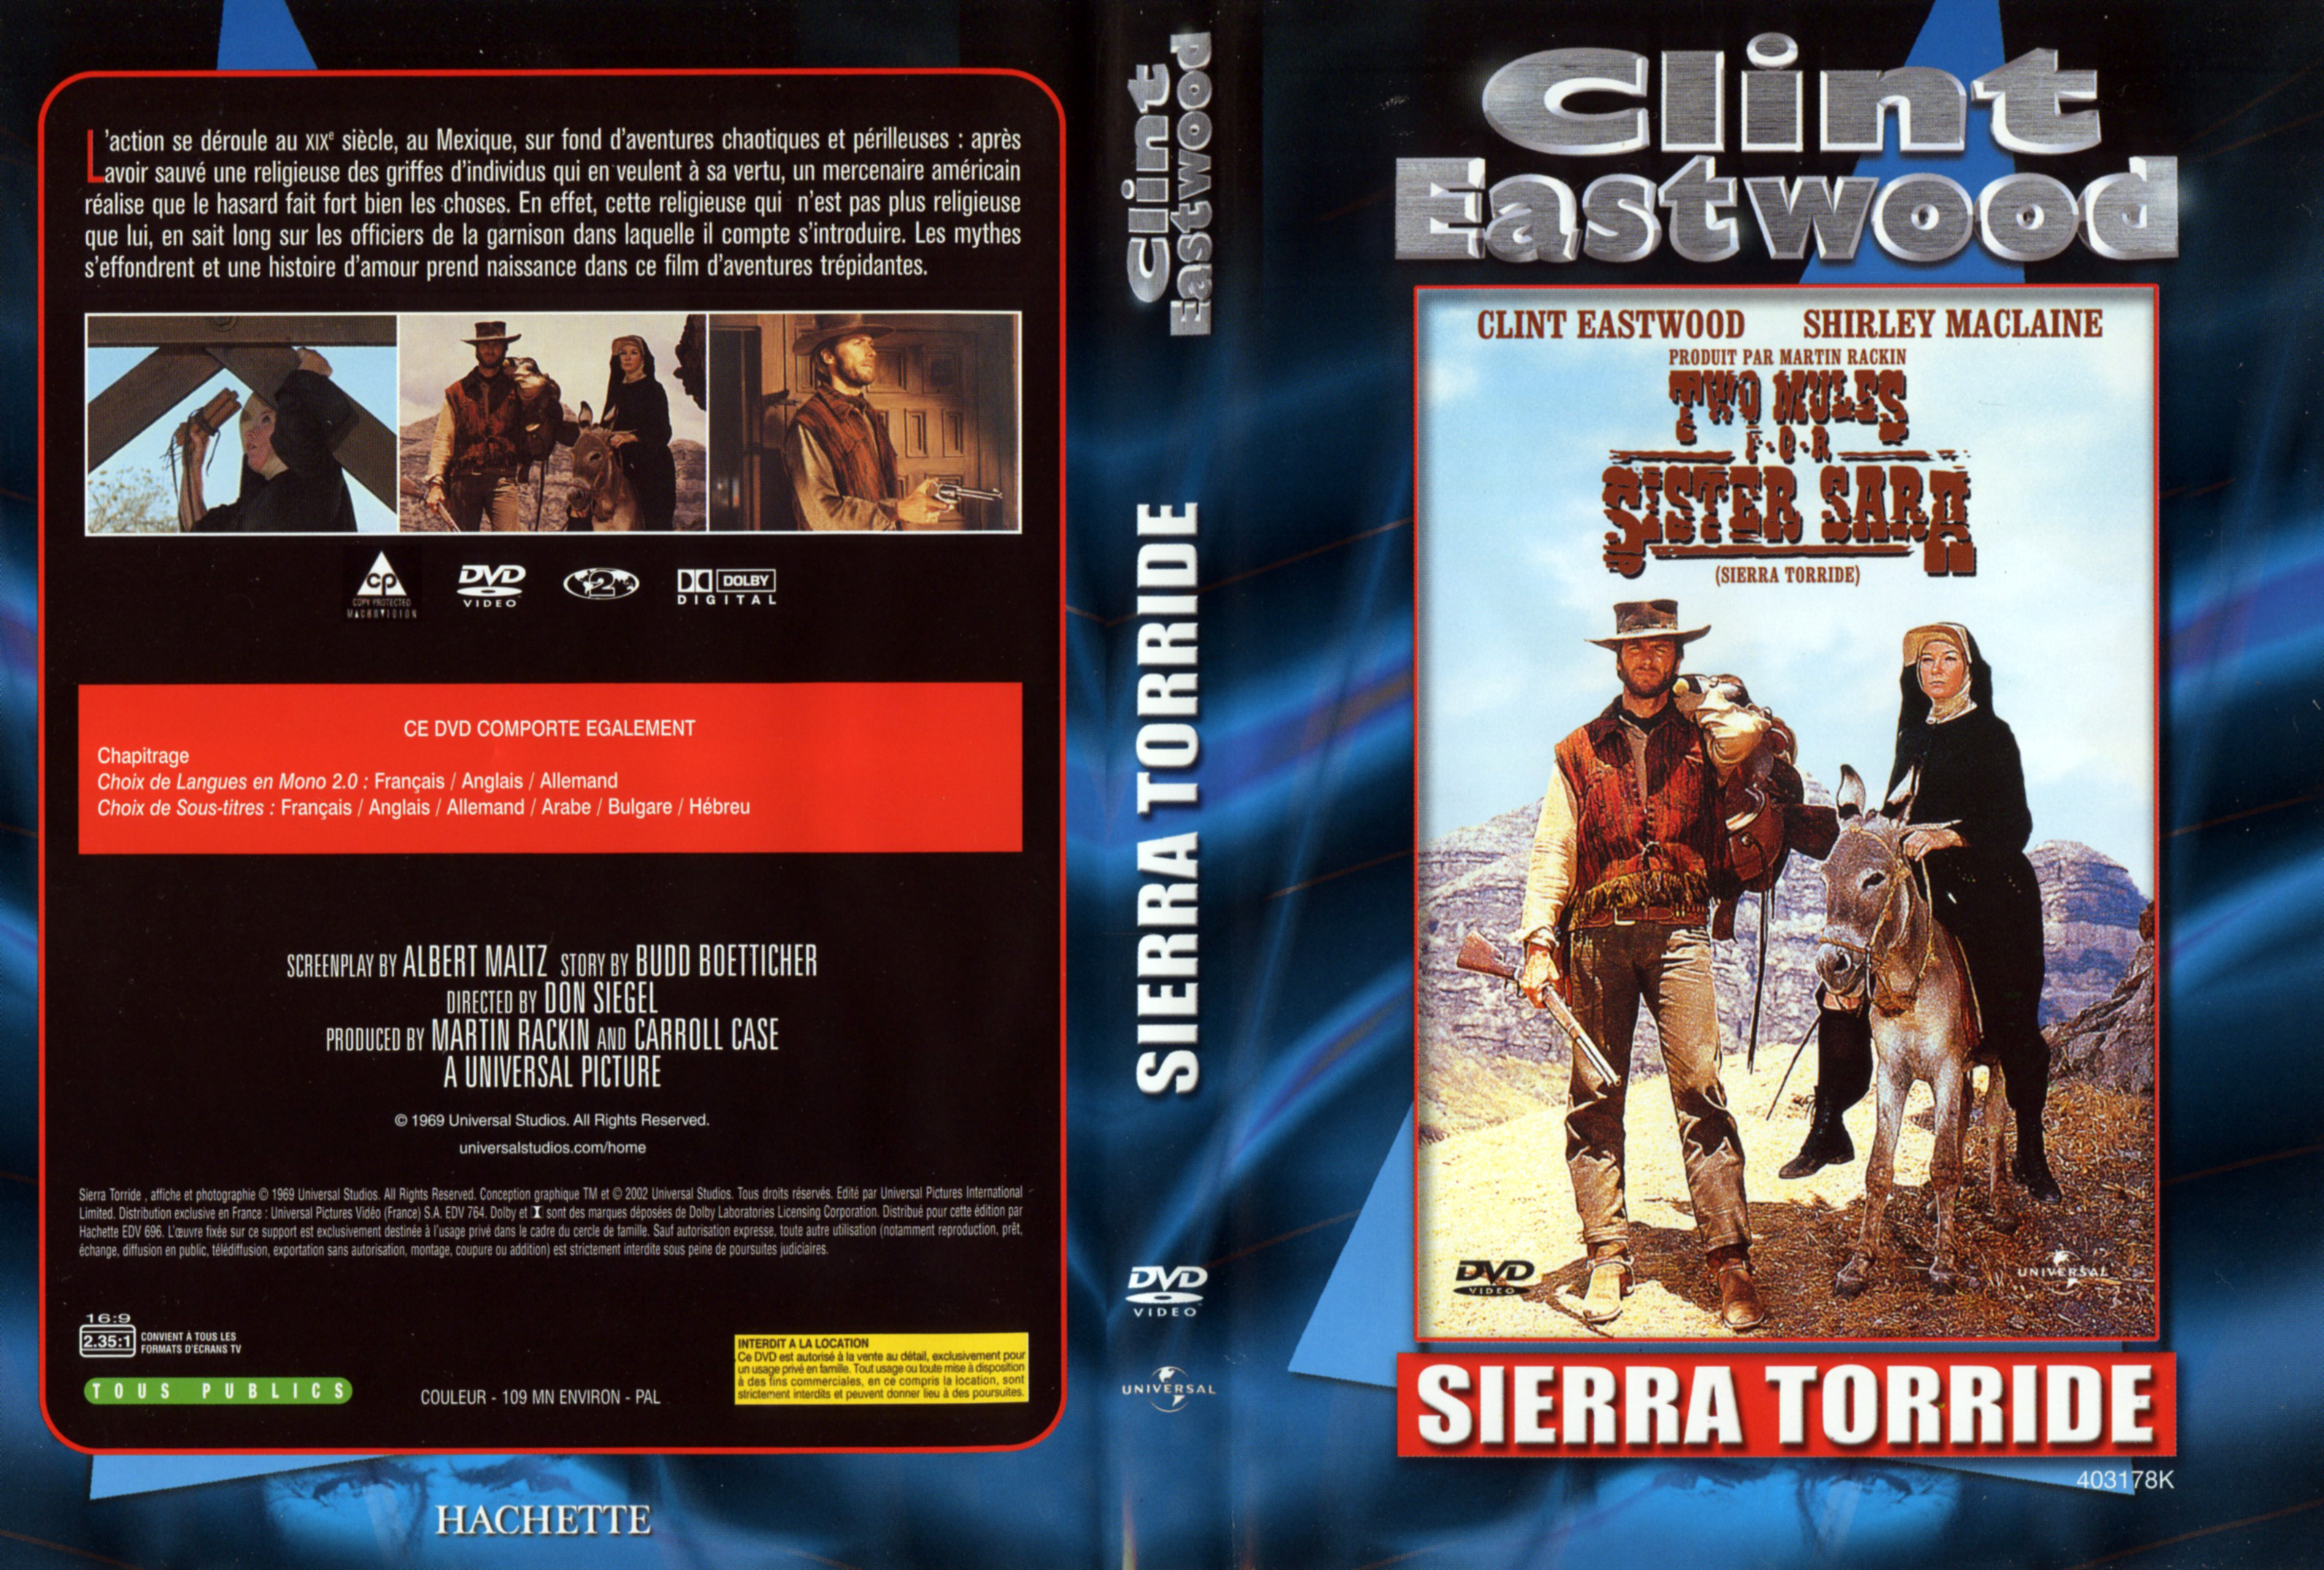 Jaquette DVD Sierra torride v2